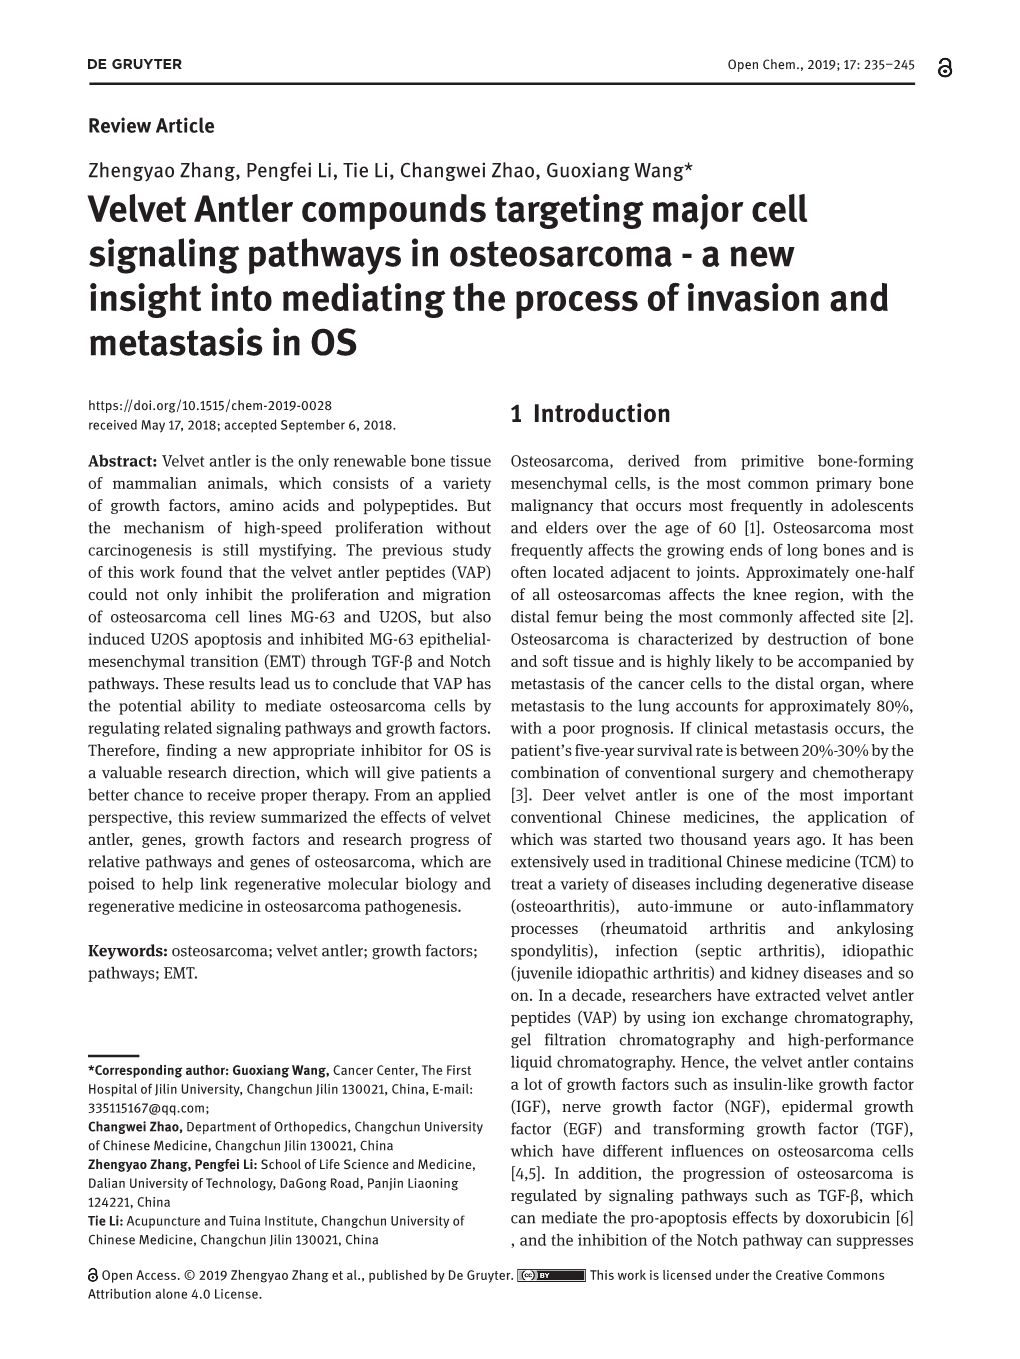 Velvet Antler Compounds Targeting Major Cell Signaling